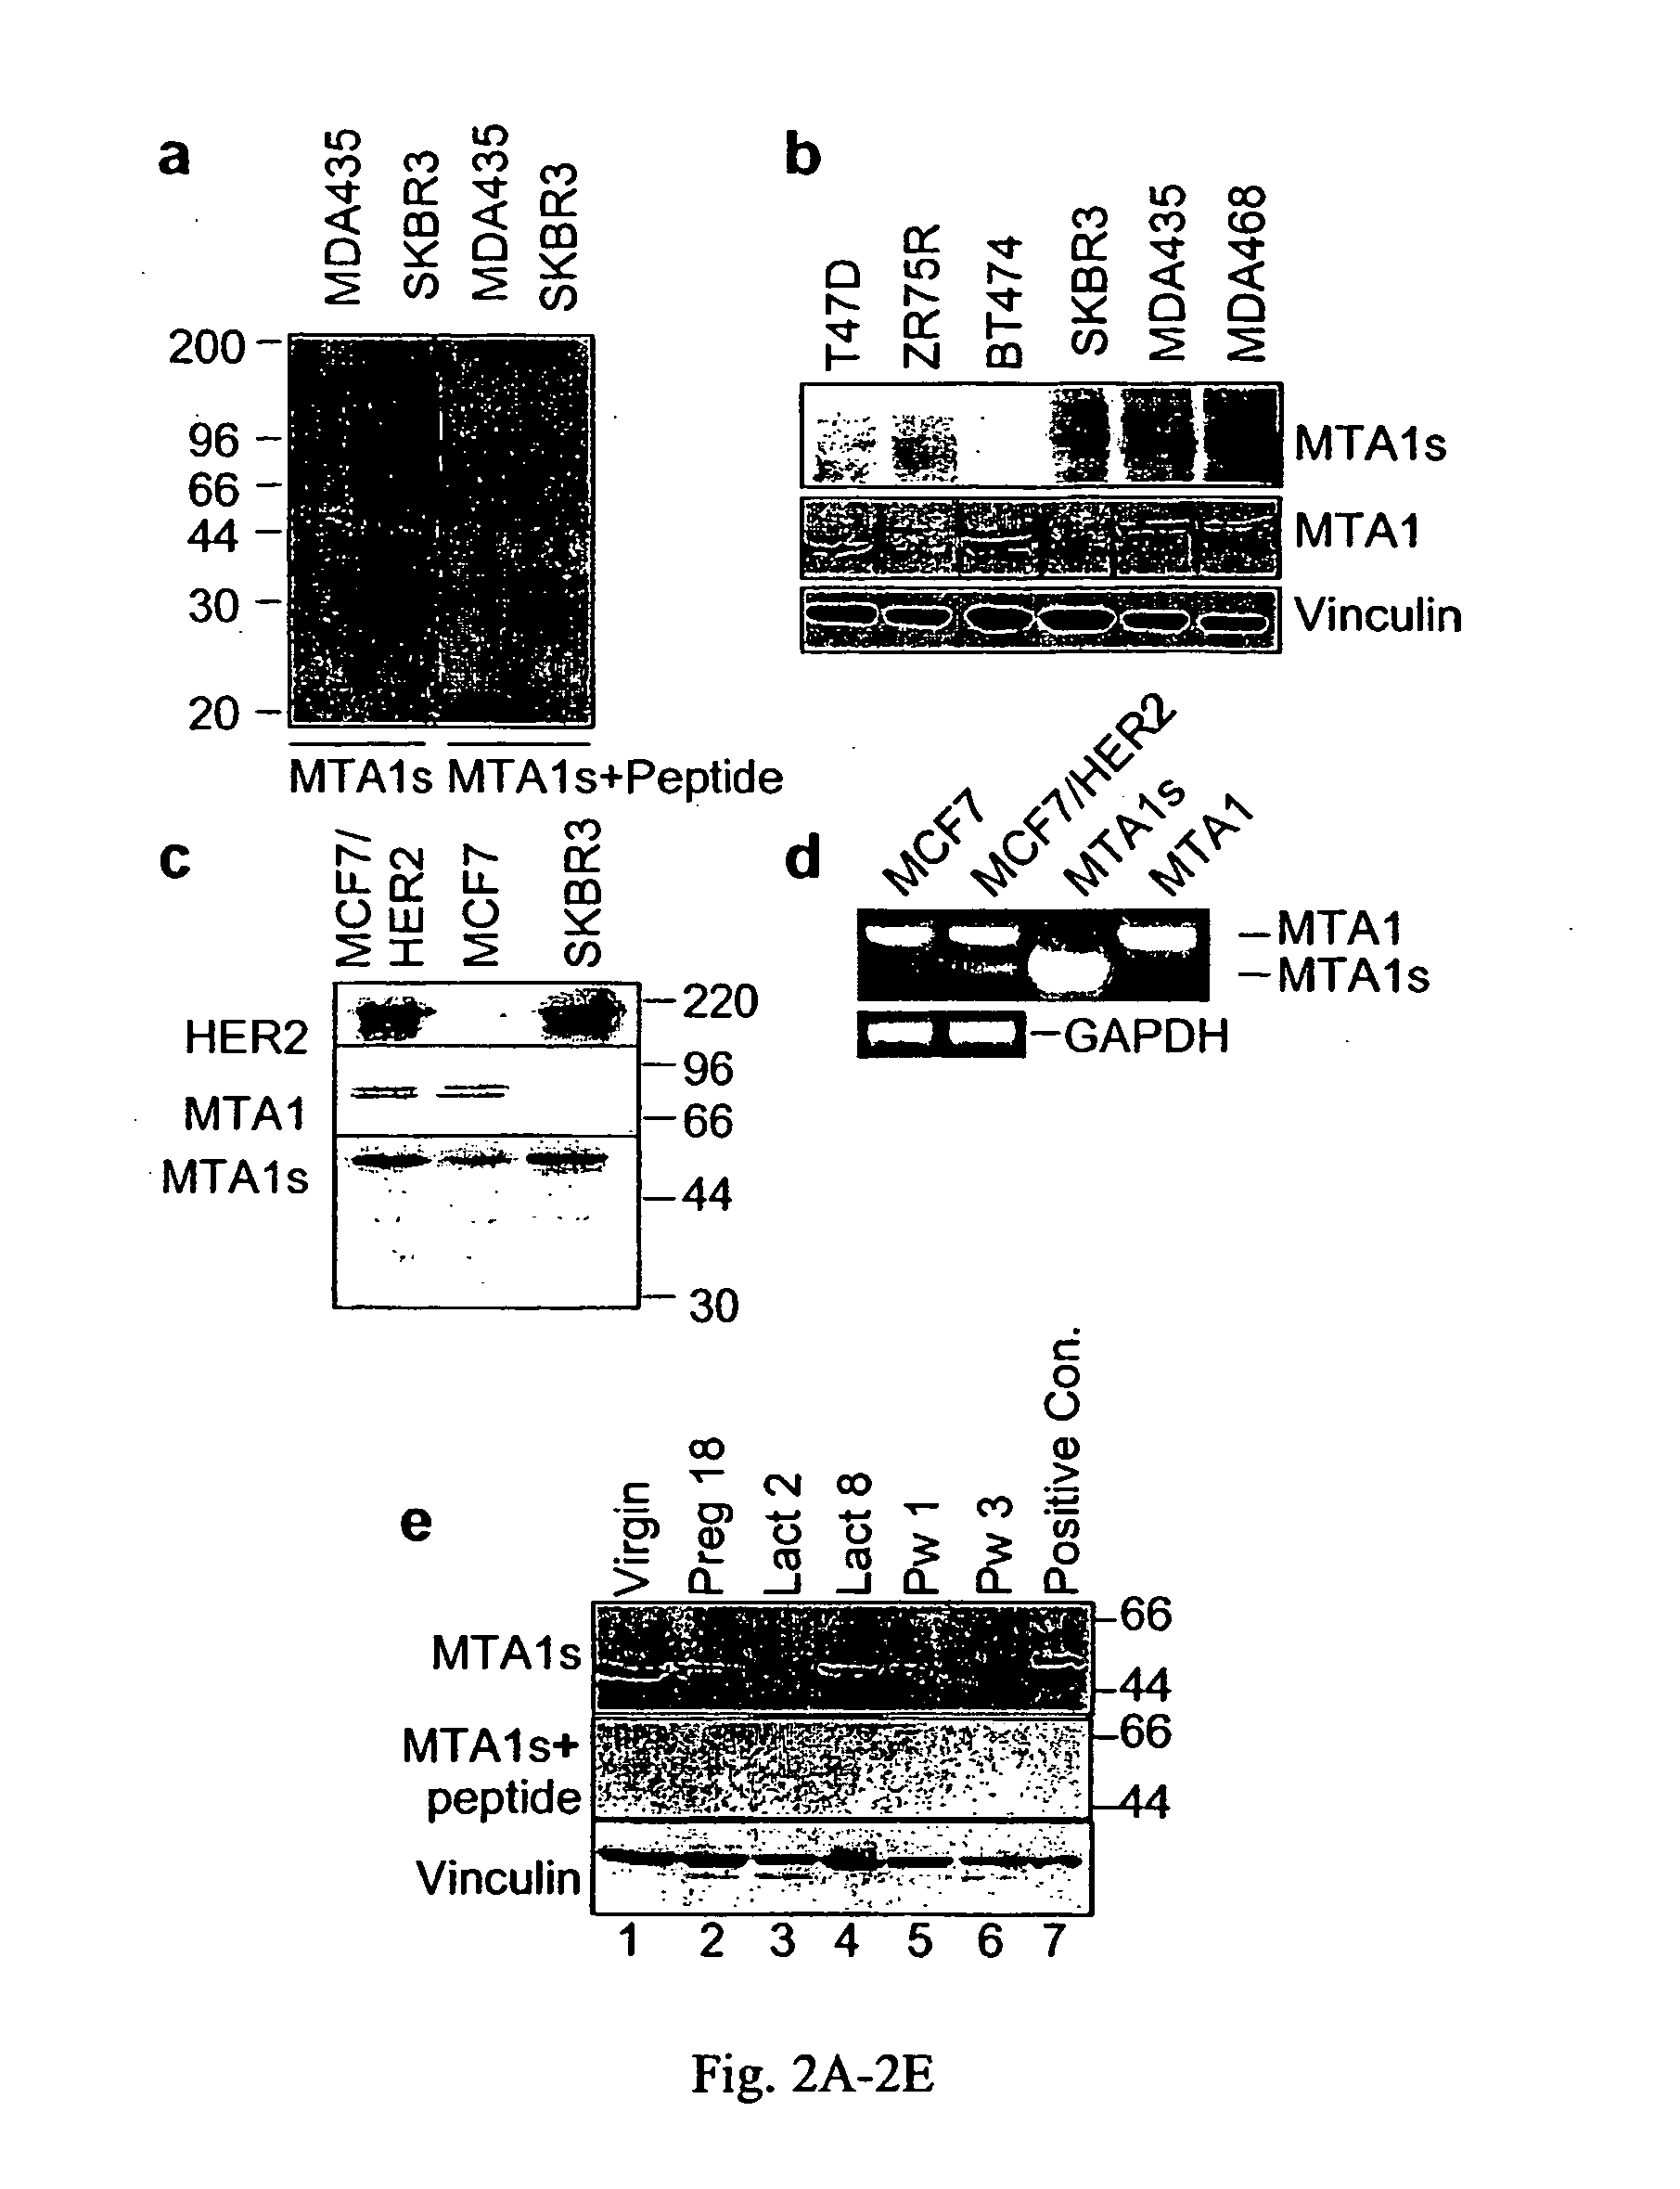 Mta1s, a steriod hormone receptor corepressor